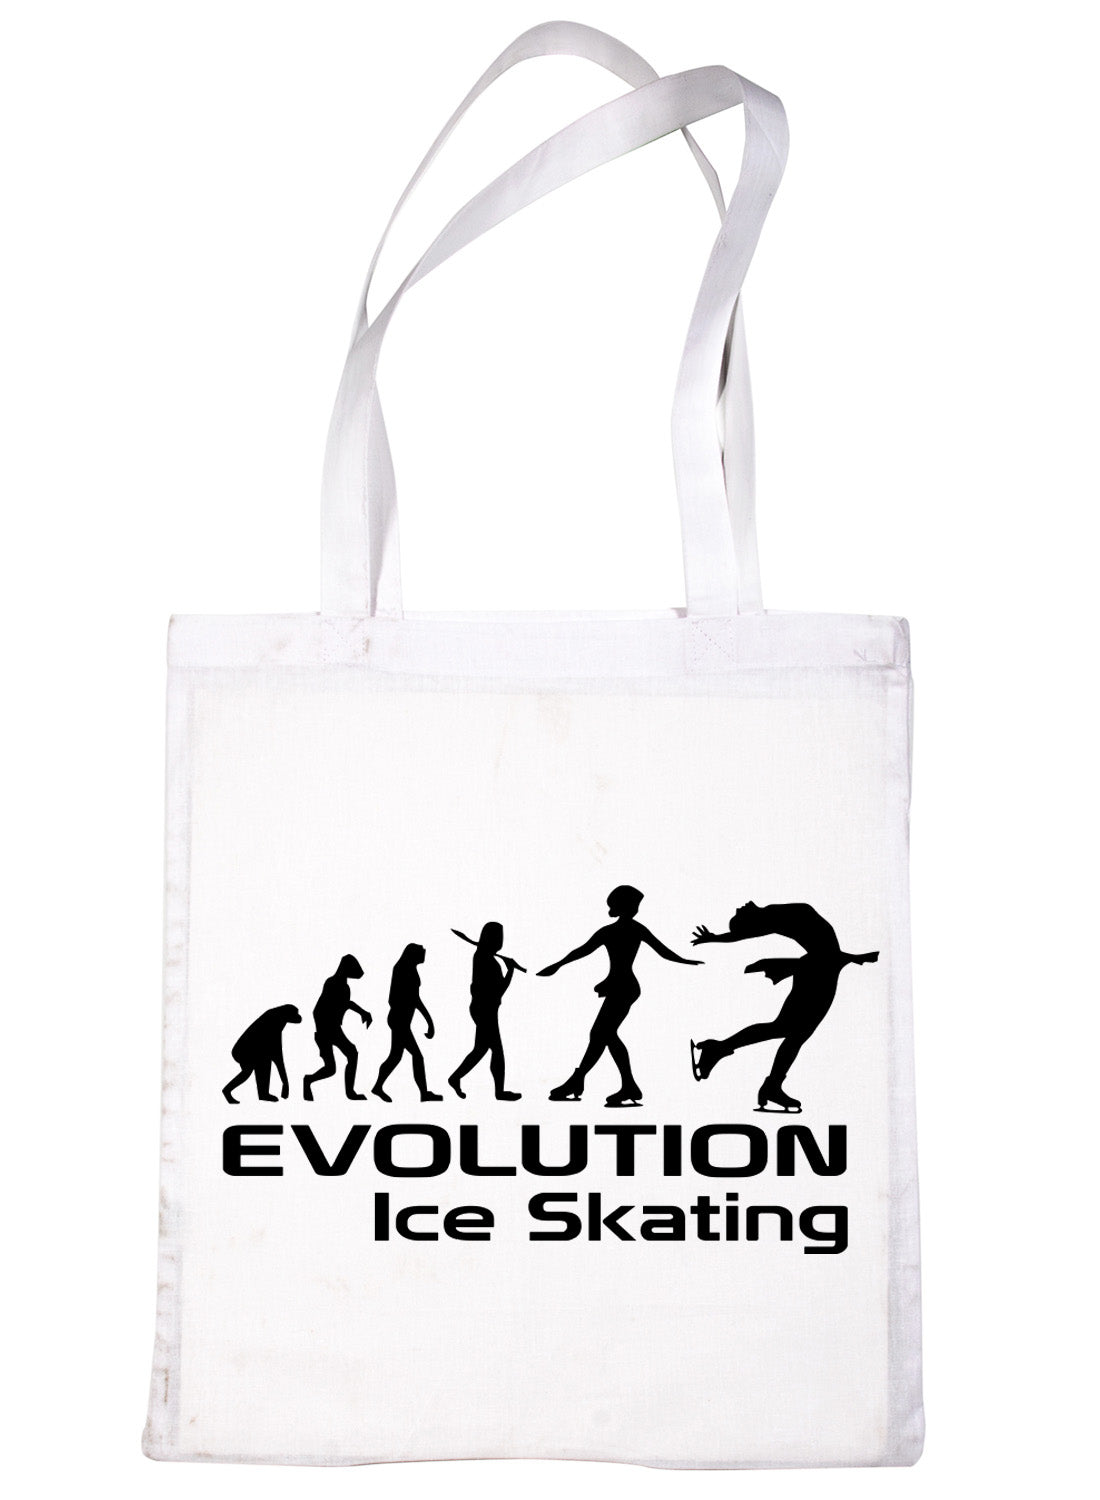 Evolution Of Ice Skating Skater Shopping Tote Bag Ladies Gift